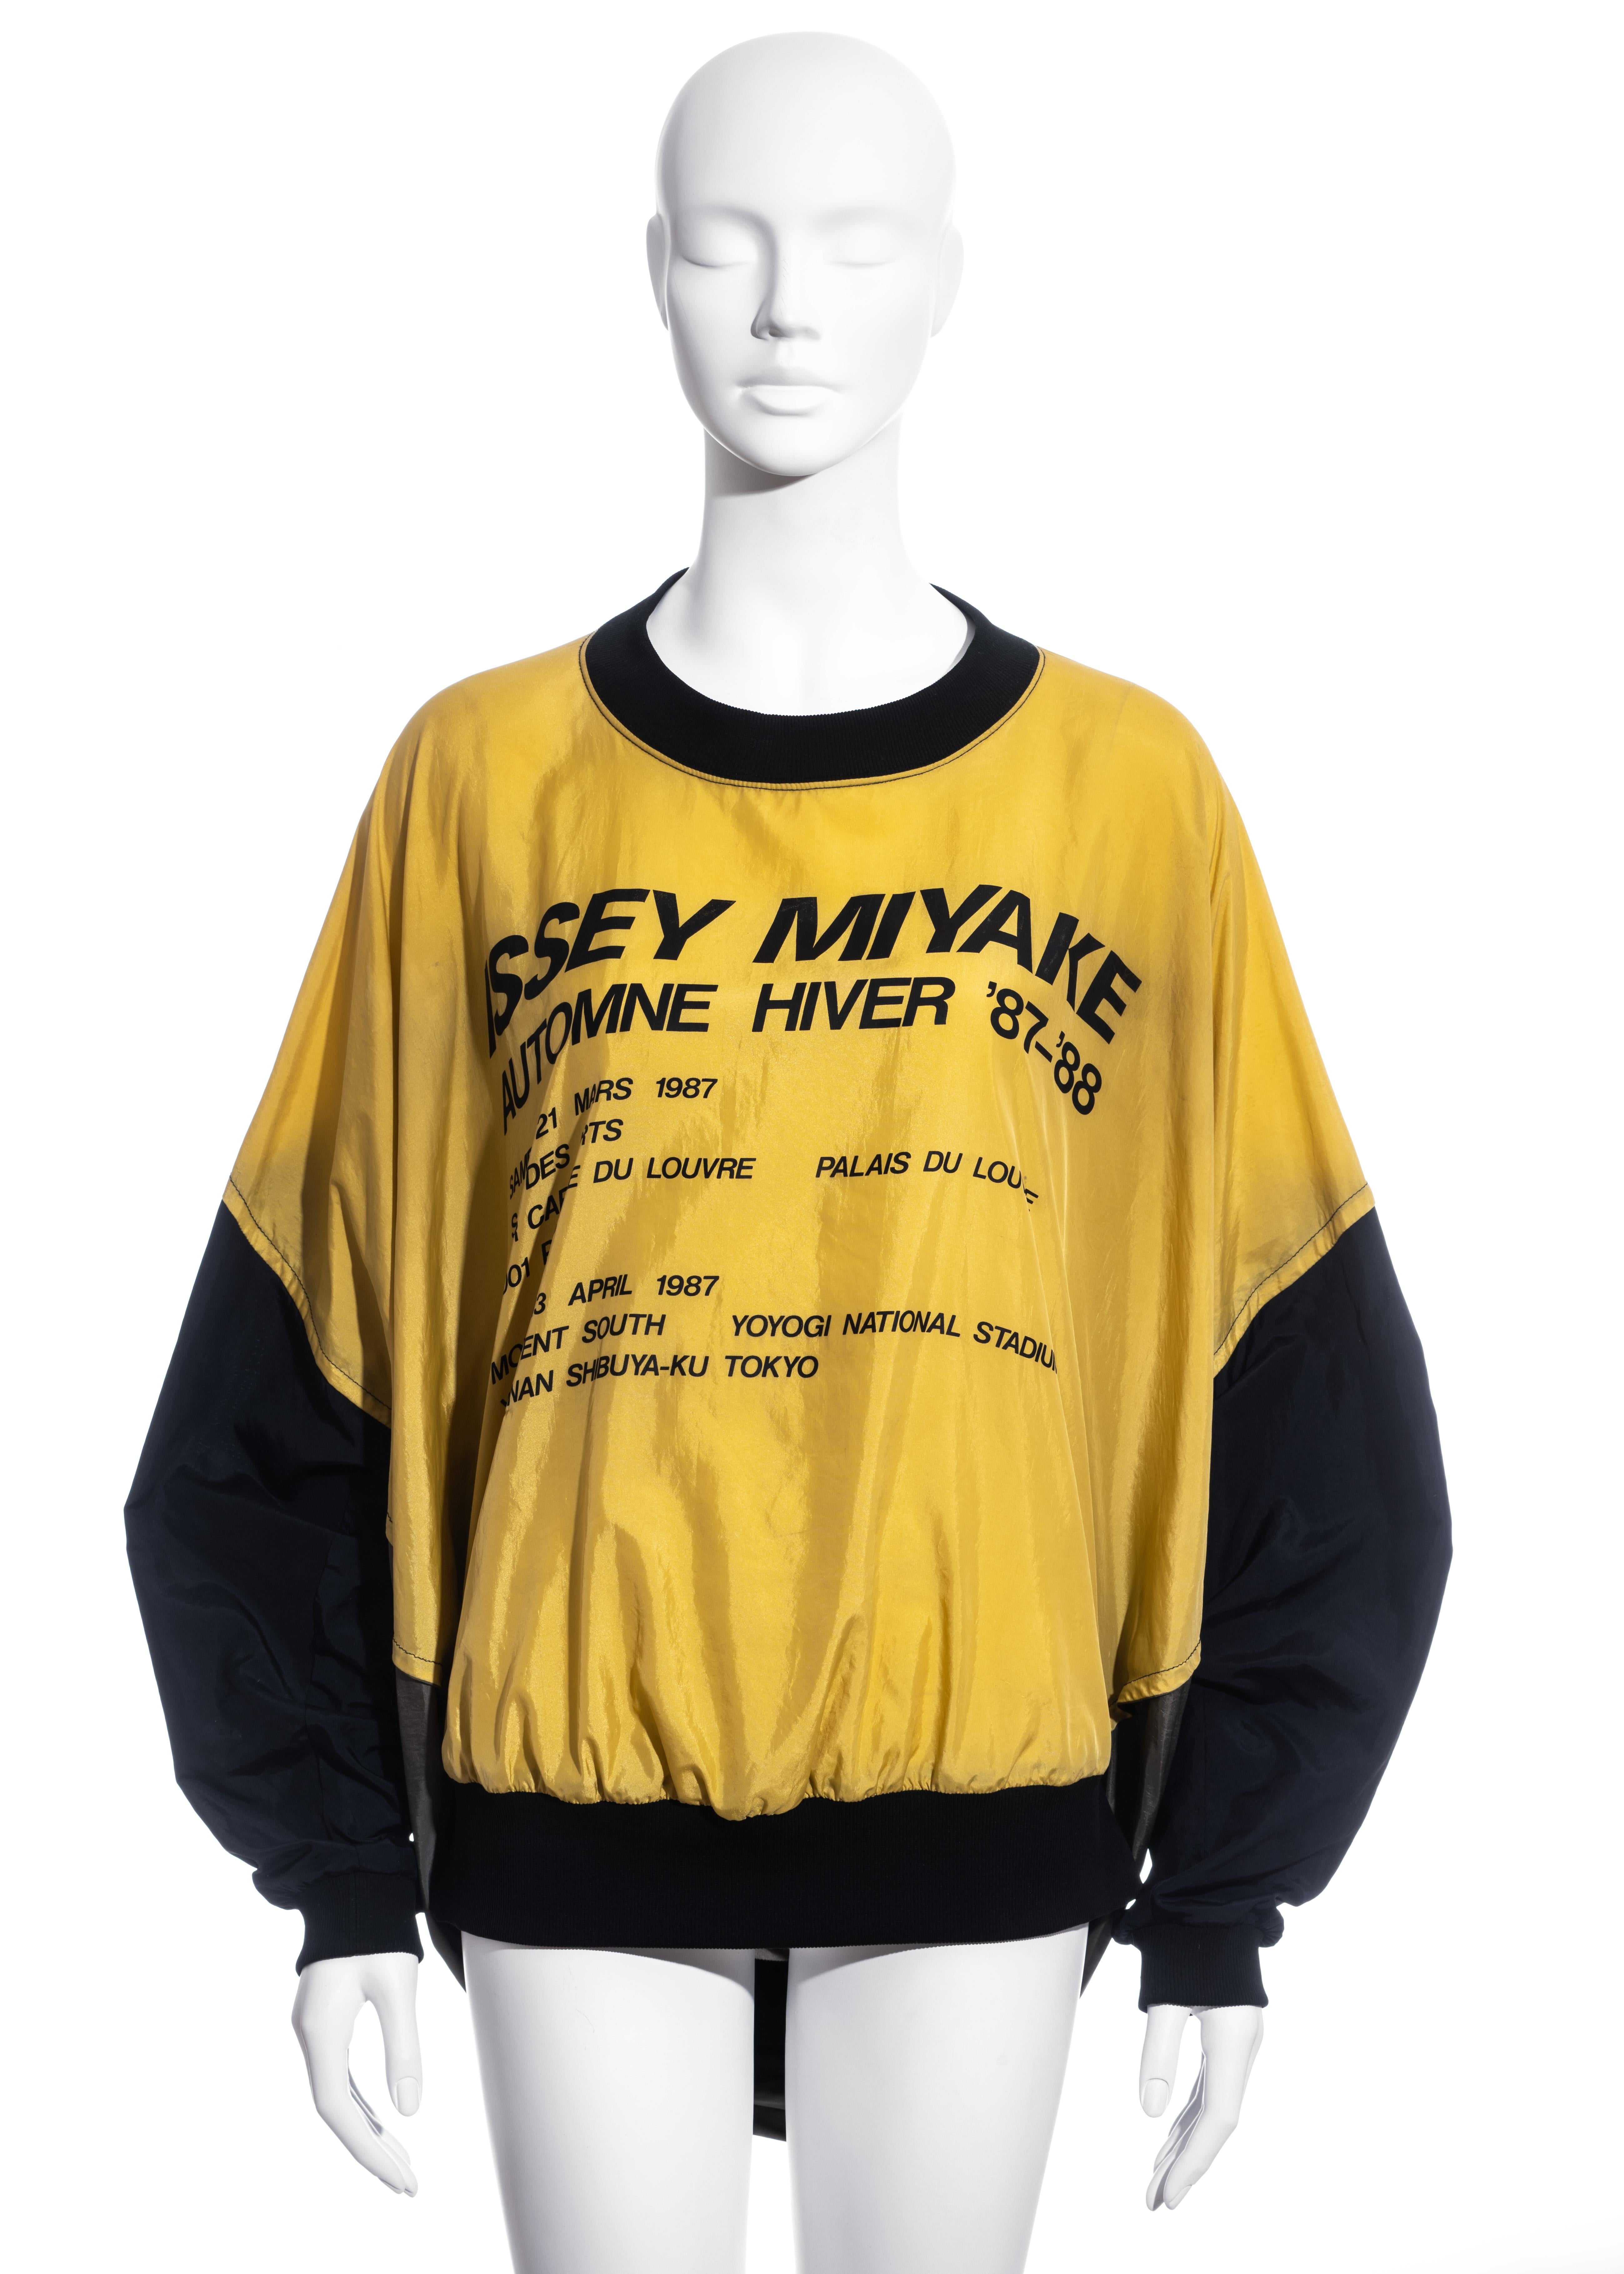 ▪ Issey Miyake crewneck sweater 
▪ 100% Nylon
▪ Constructed of two circular panels 
▪ Ribbed waistband, cuffs and crewneck 
▪ Size Medium
▪ Fall-Winter 1987 